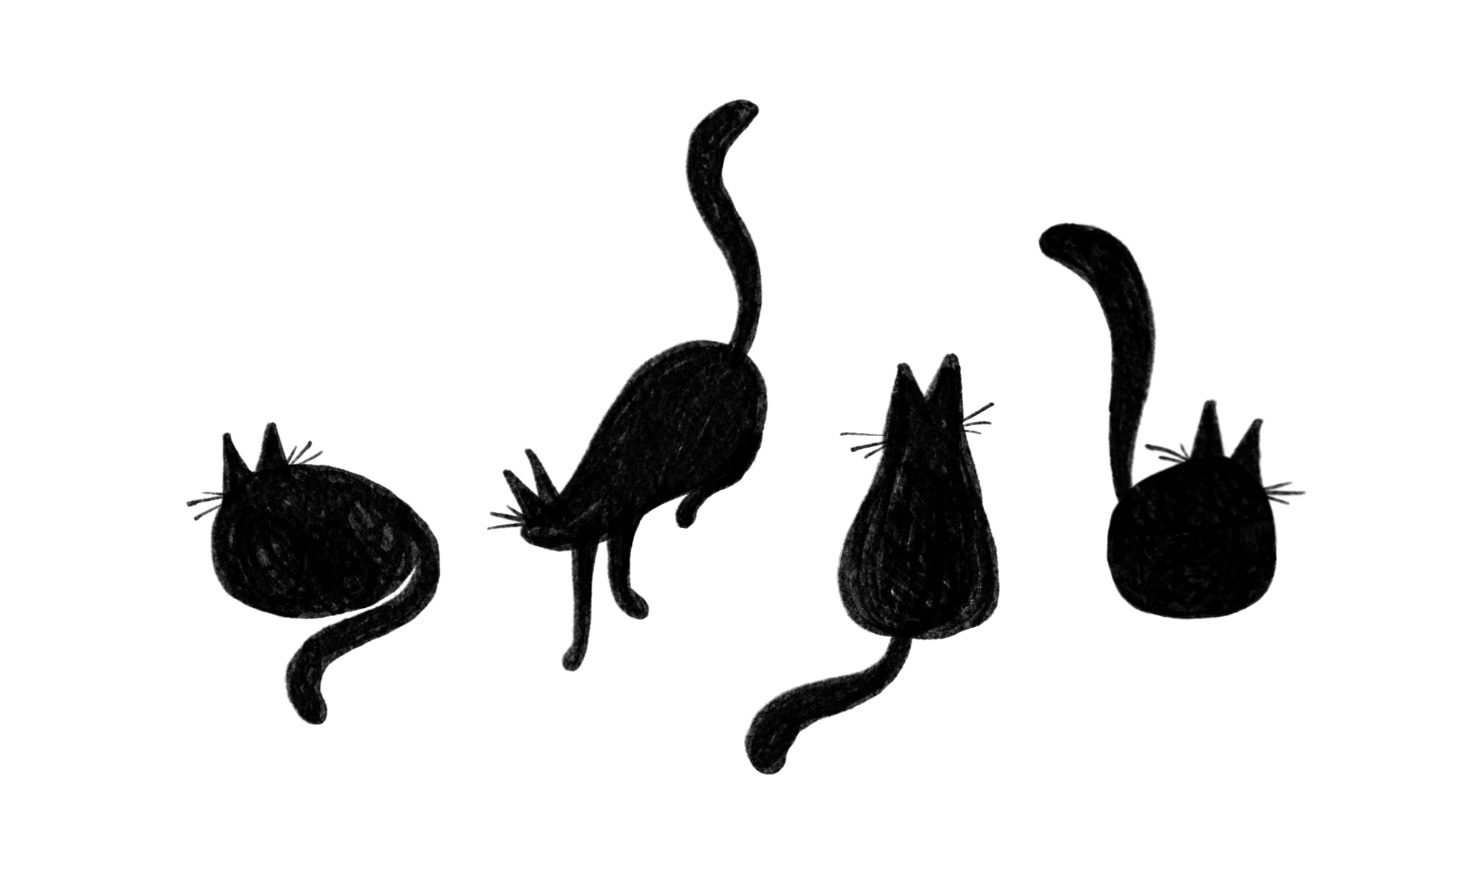 Four black cats, illustration by Shawna Mercano